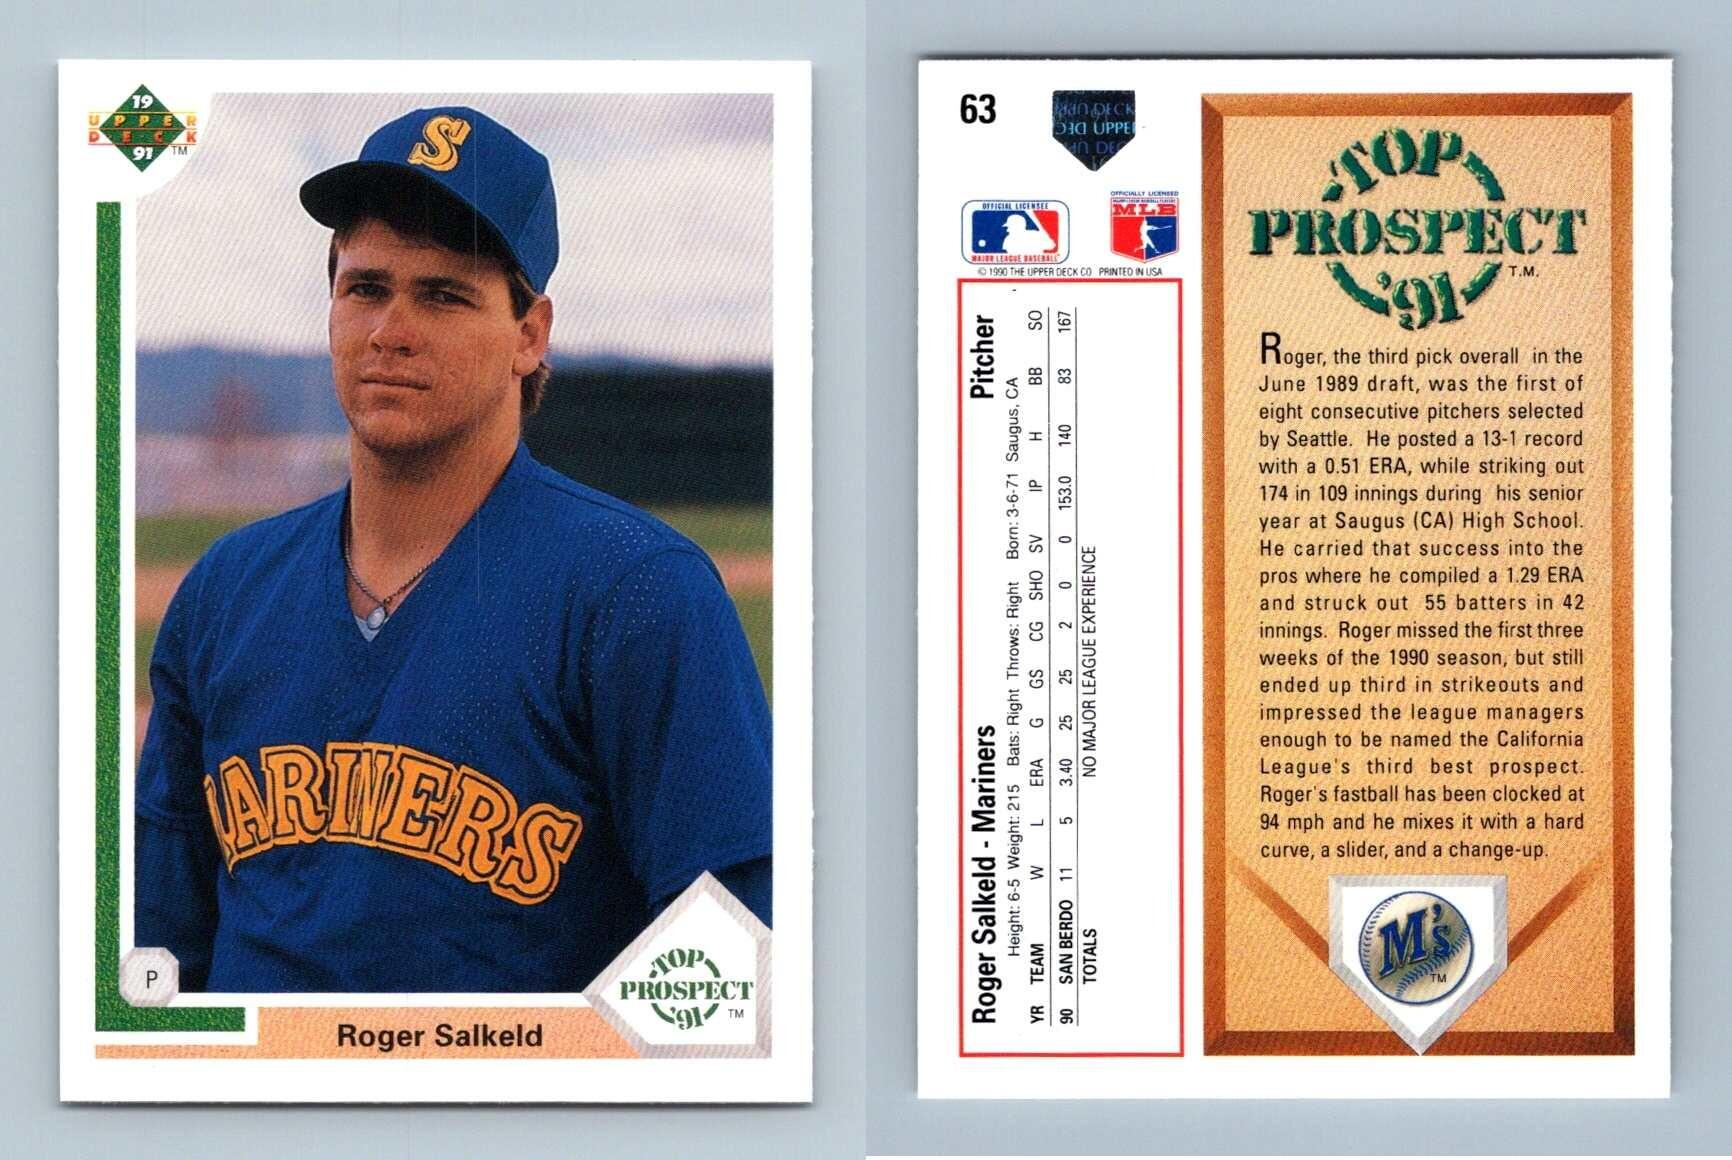 1991 Upper Deck Baseball Card #246 Frank Thomas